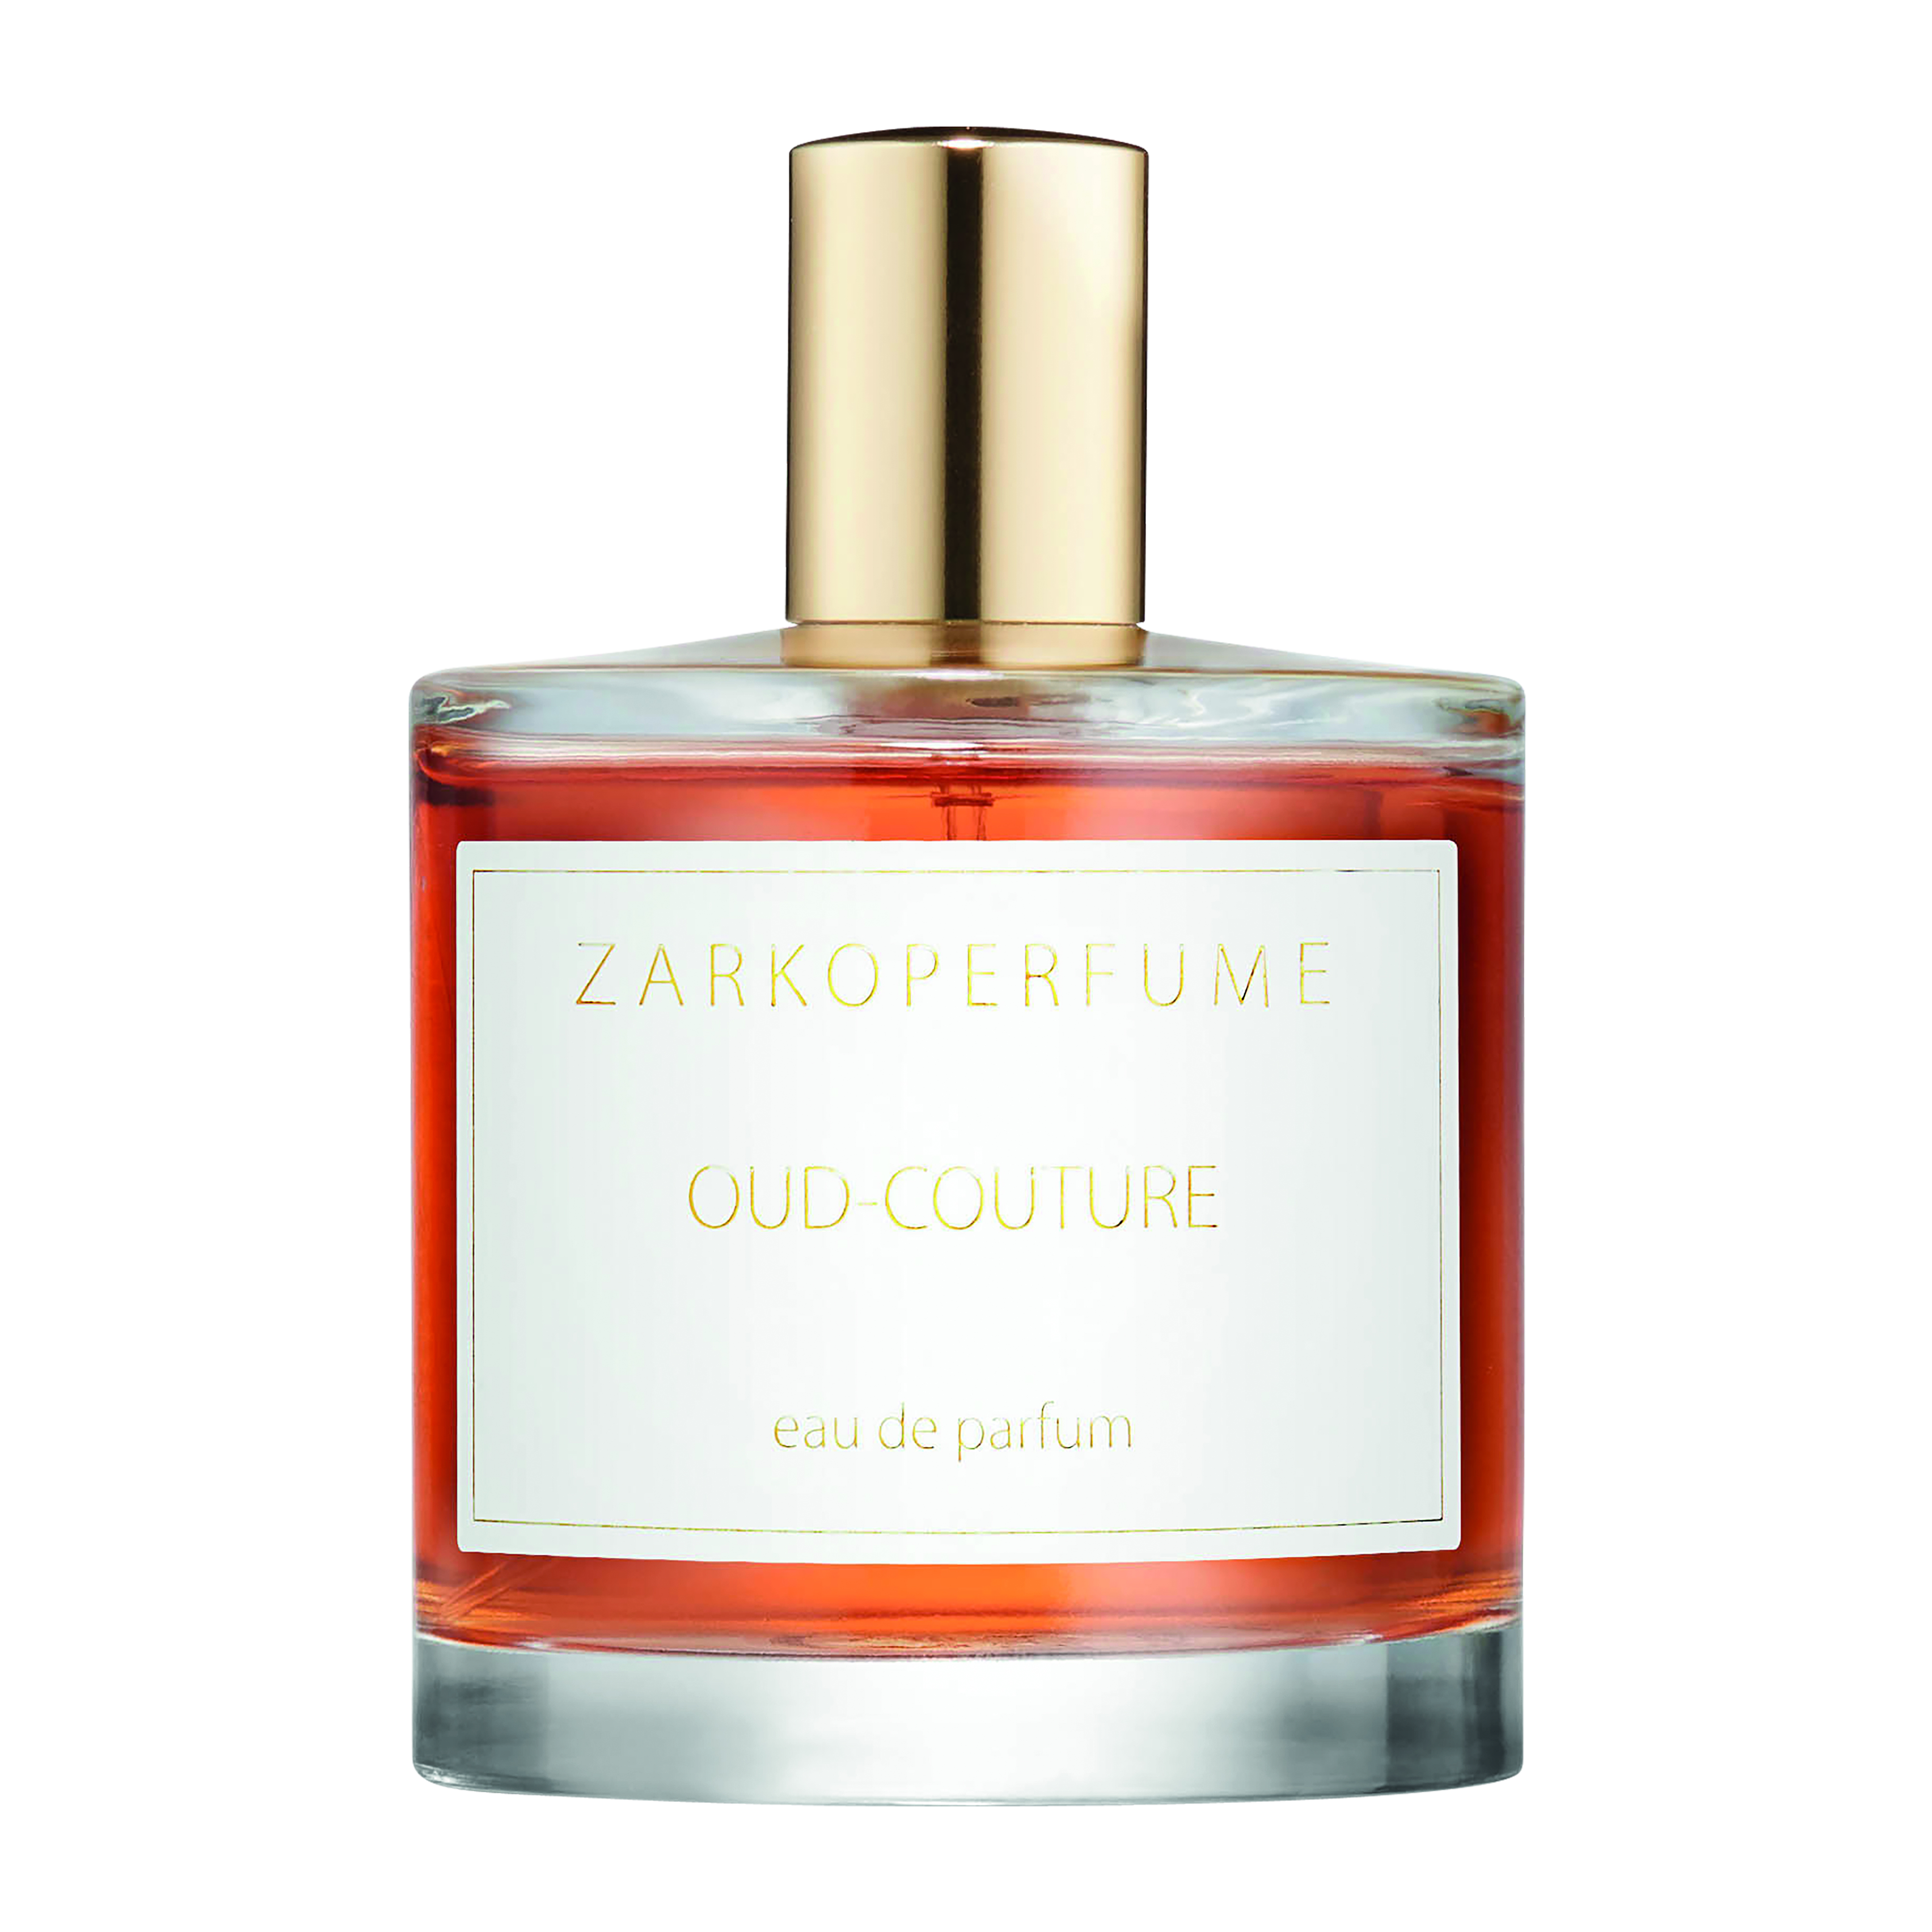 Zarkoperfume Oud Couture Eau de Parfum